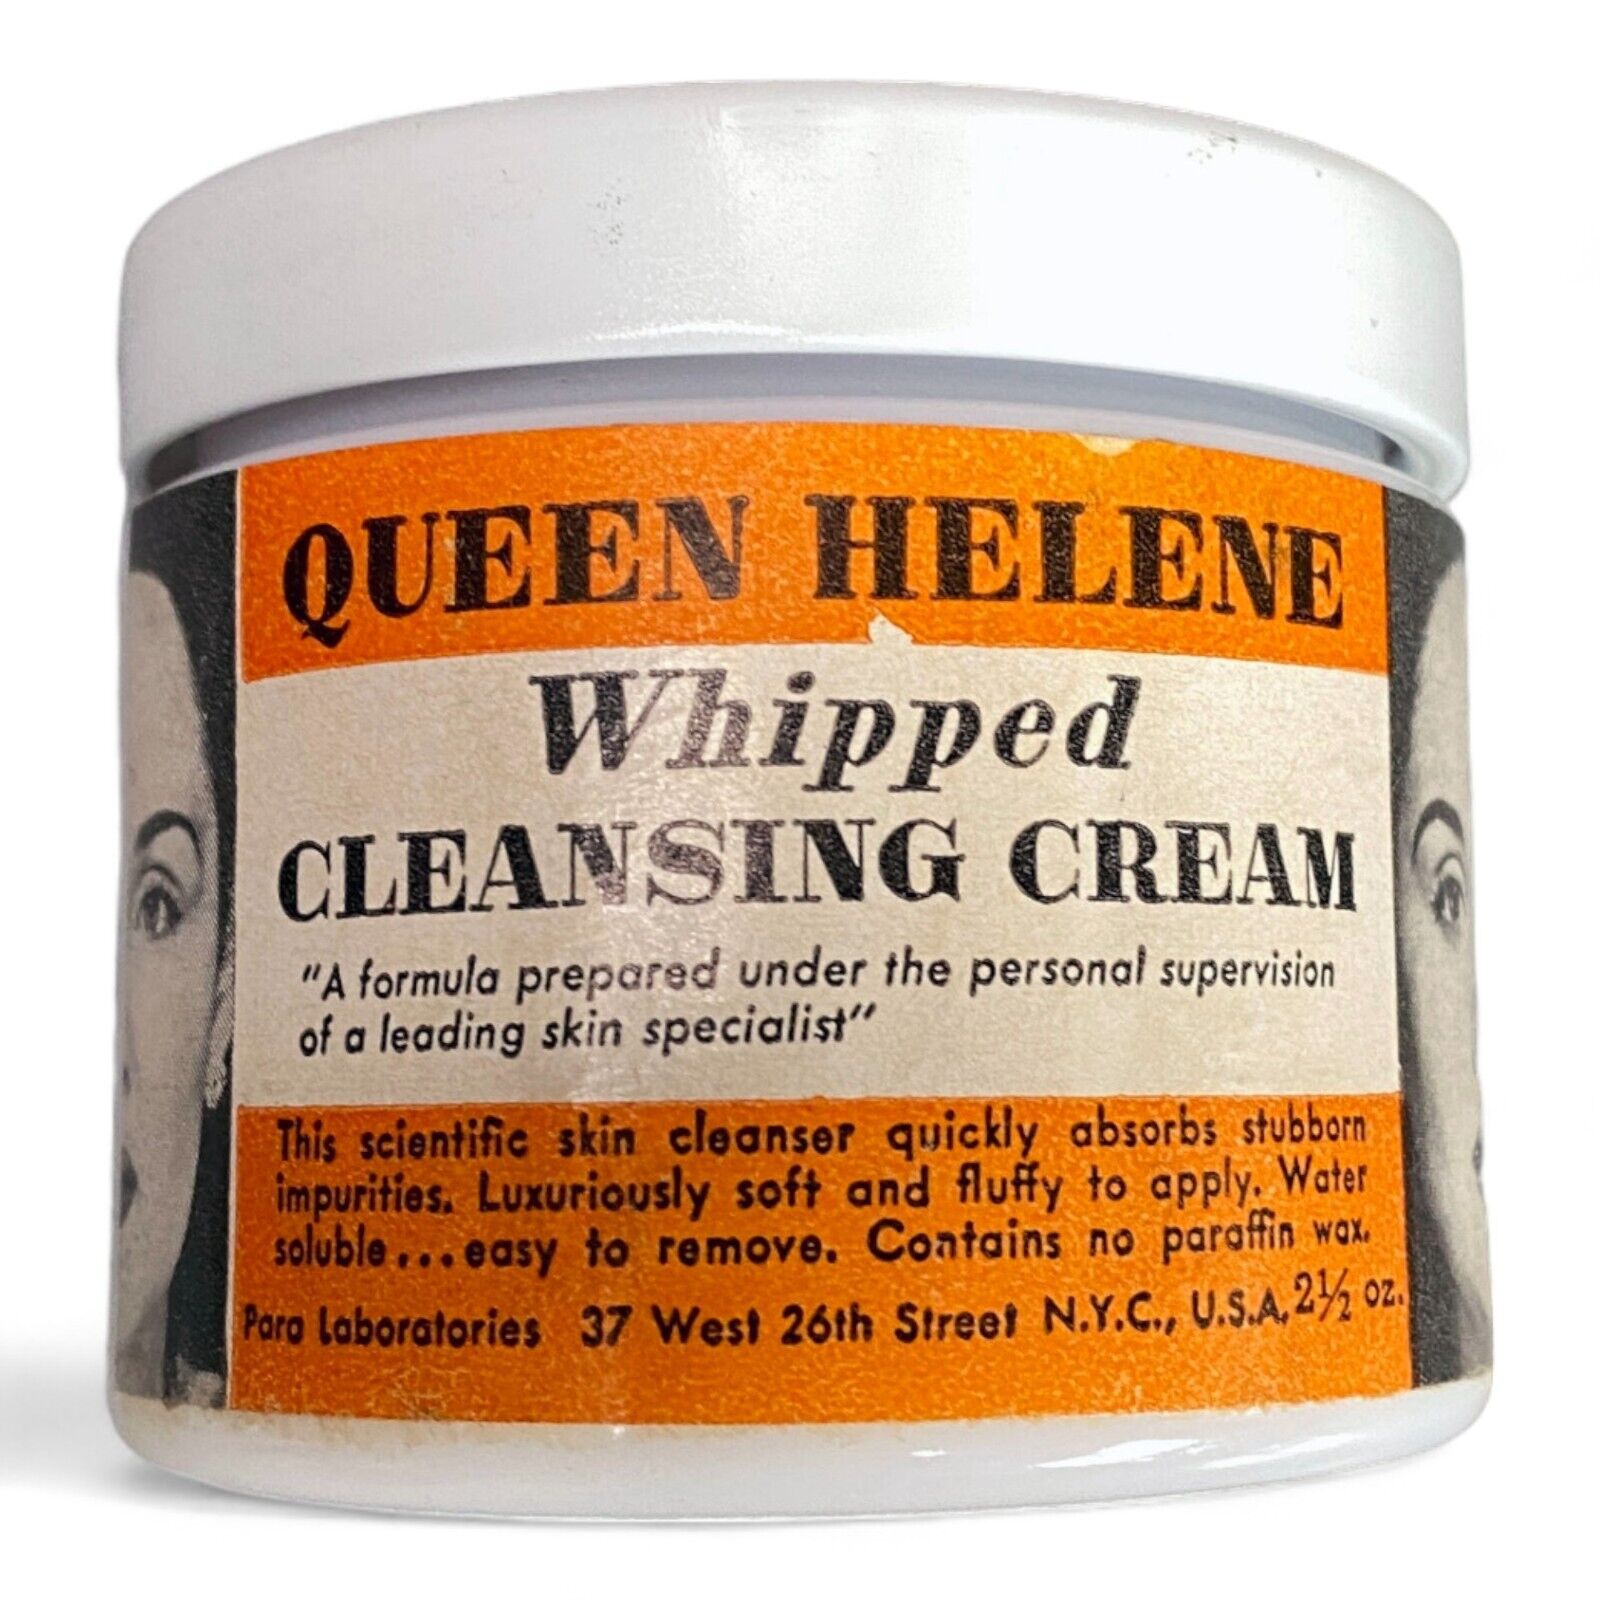 VINTAGE Queen Helene Whipped Cleansing Cream in Milk Glass Bottle 2.5 oz